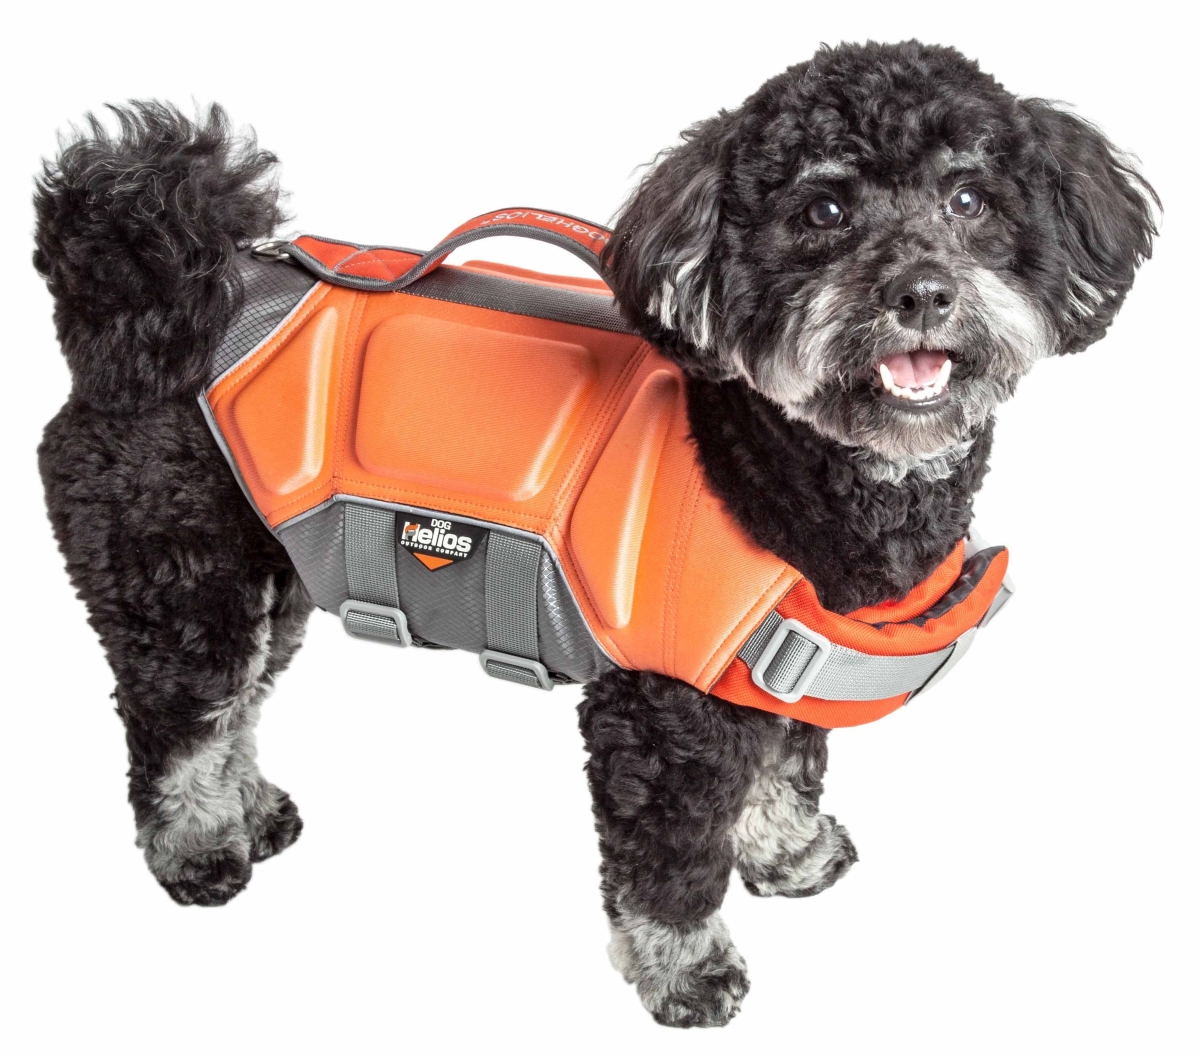 Ha18ormd Tidal Guard Multi-point Strategically-stitched Reflective Pet Dog Life Jacket Vest - Orange, Medium